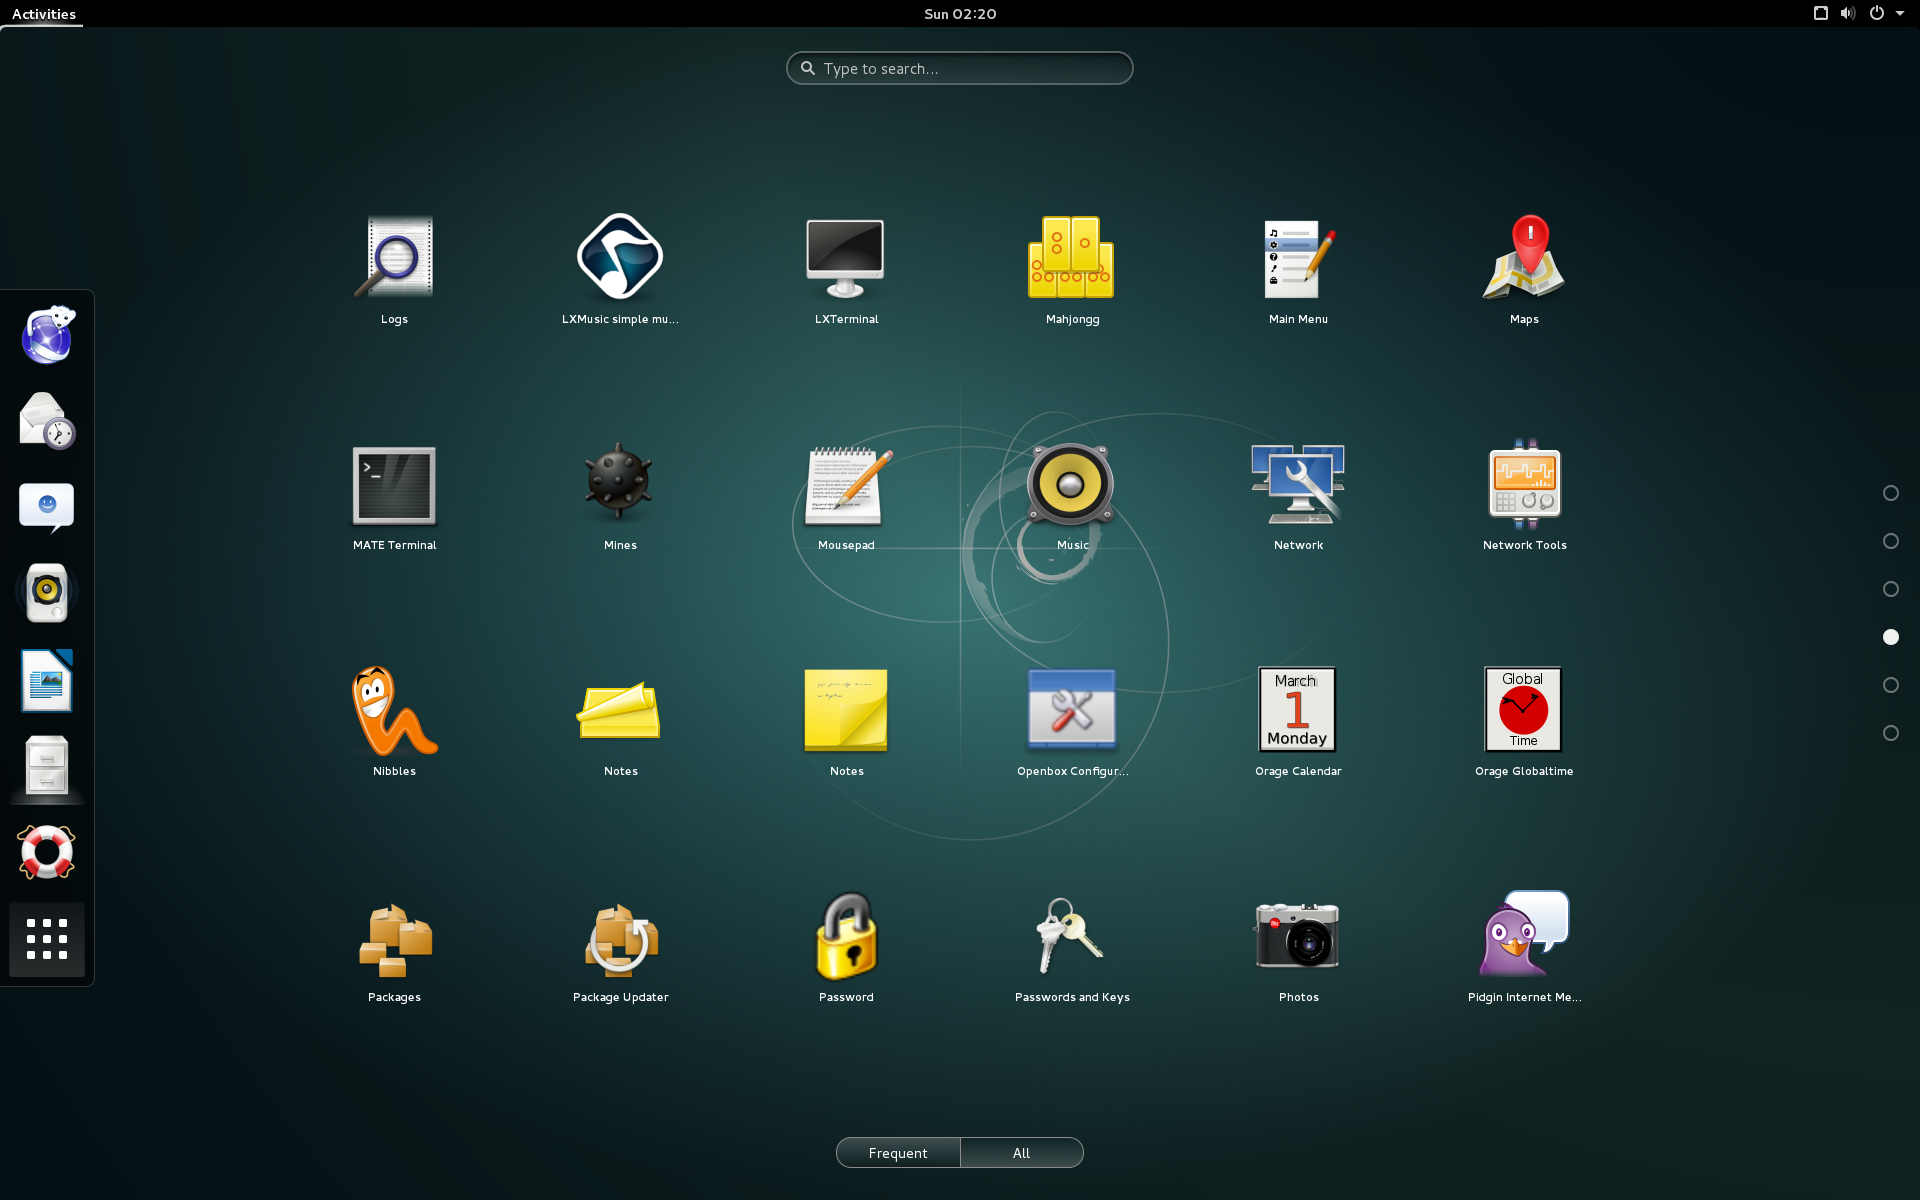 Debian 8 with Gnome 3 desktop